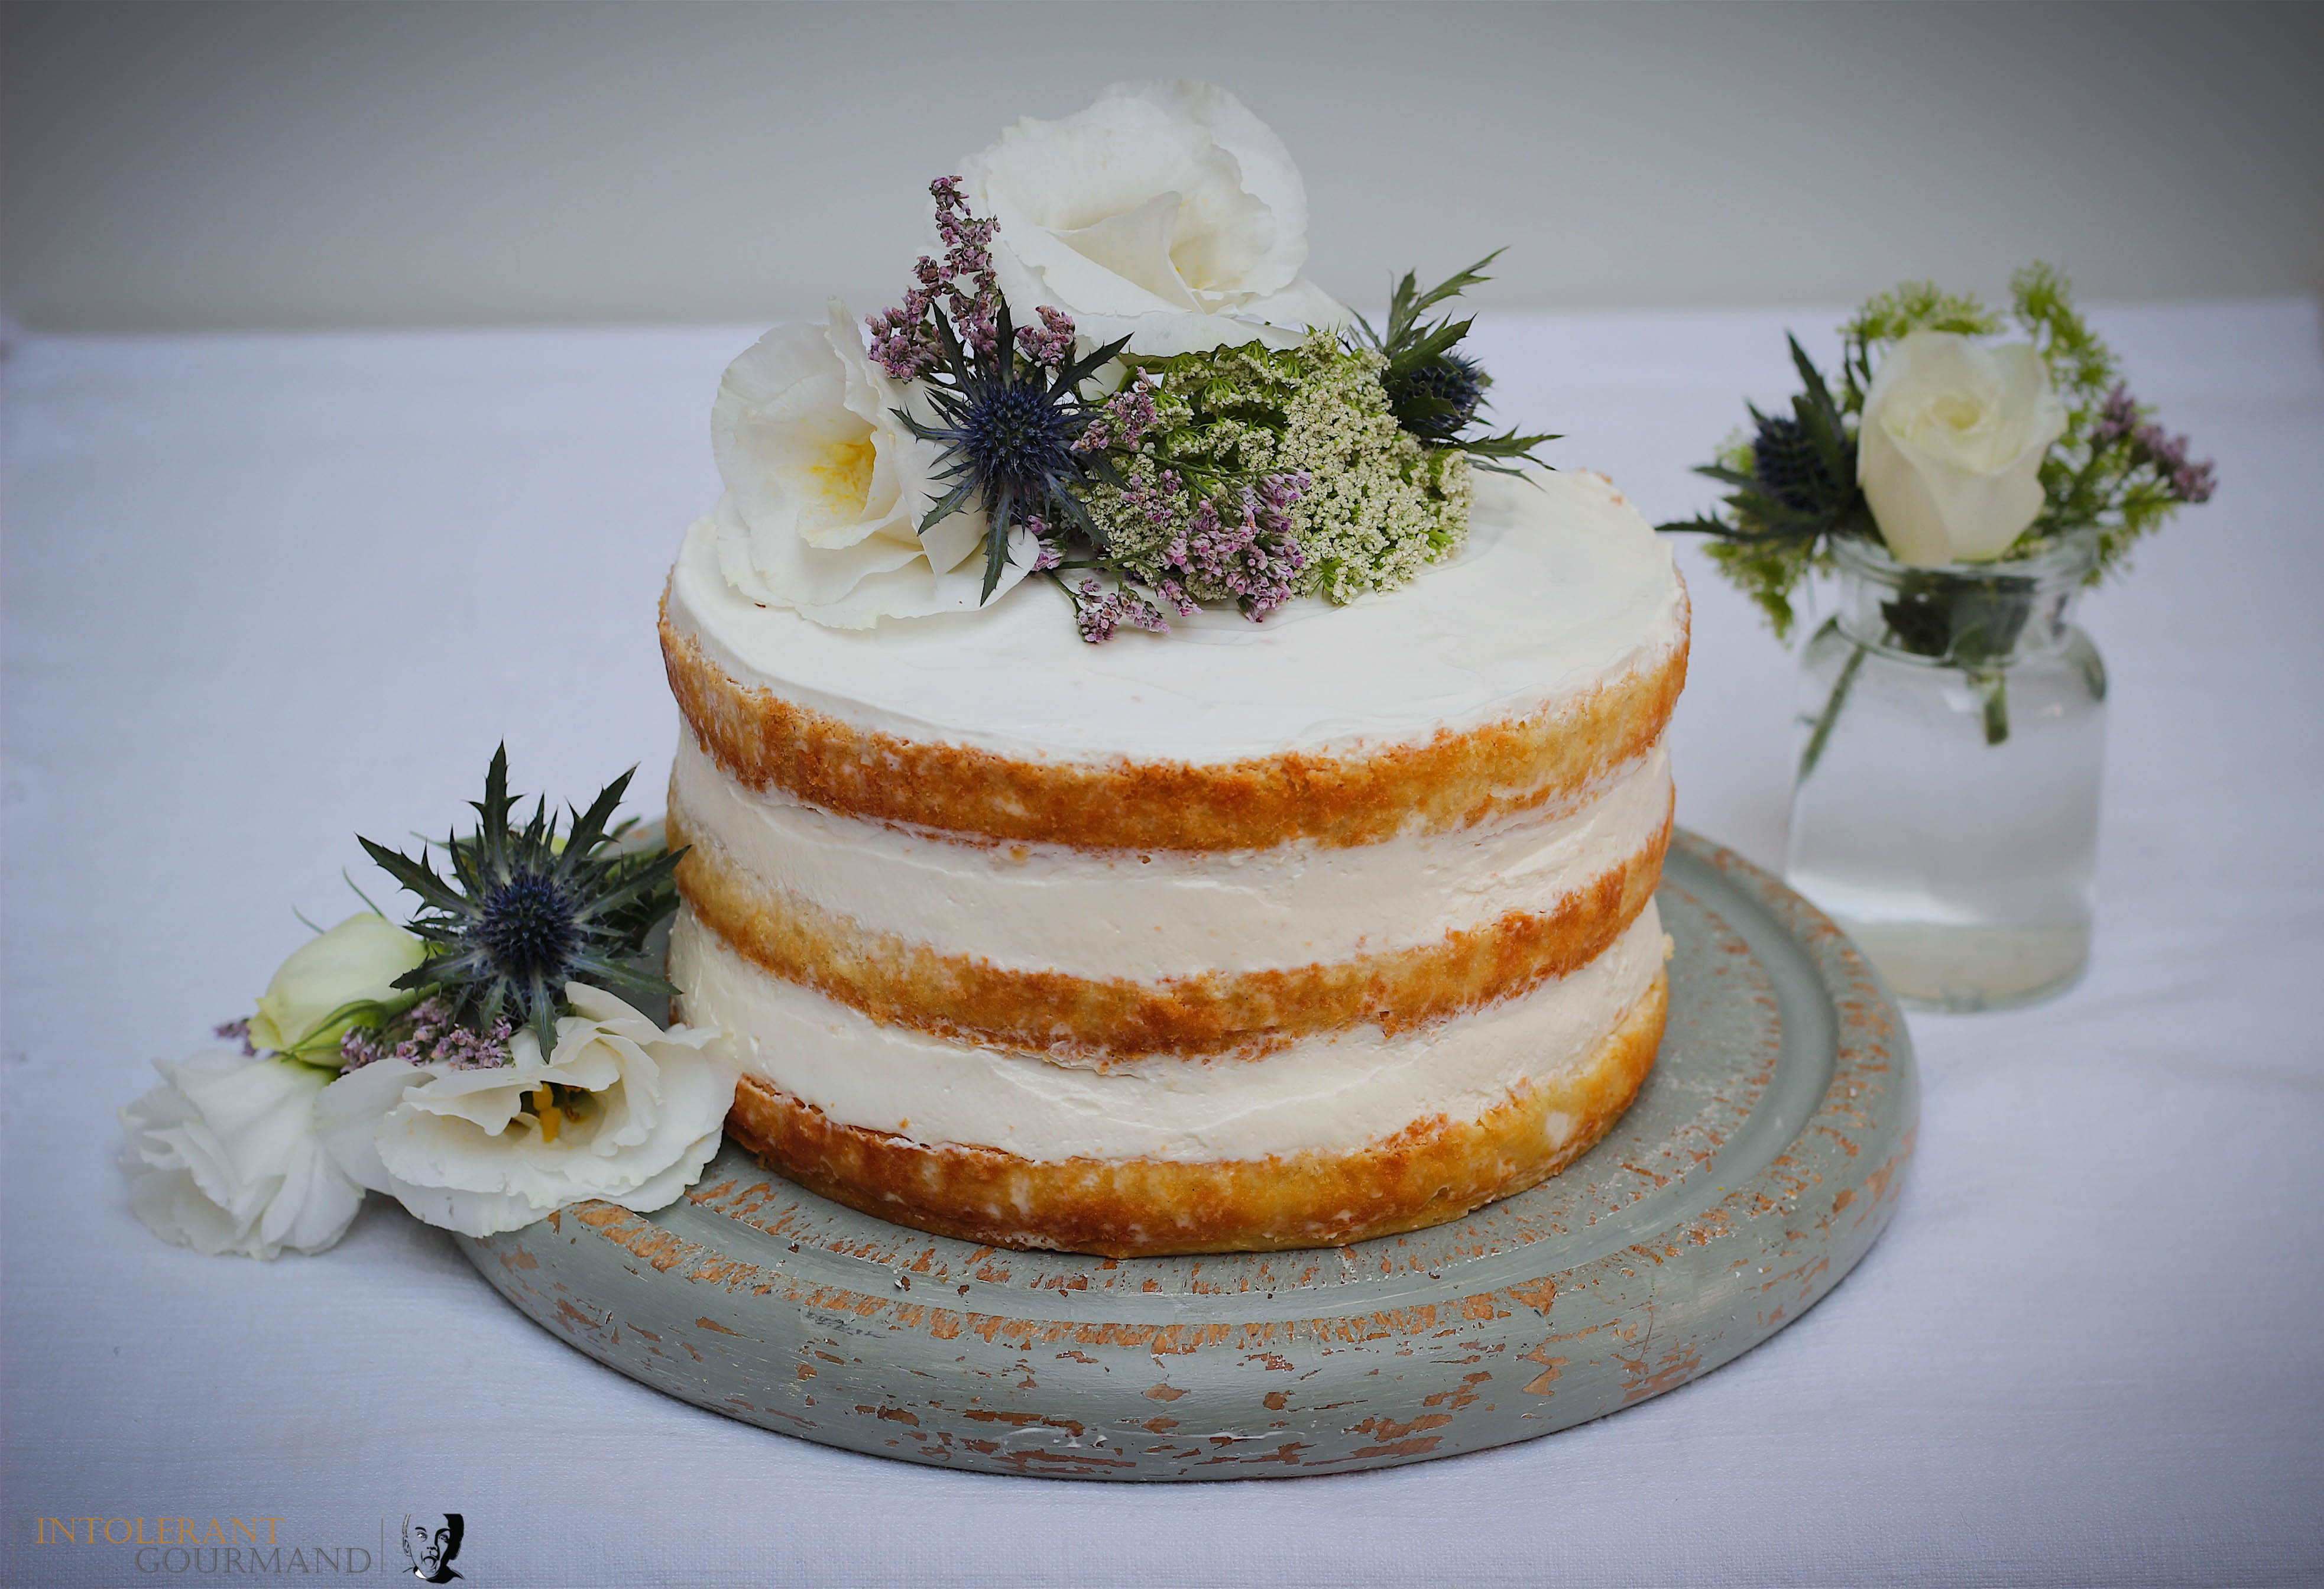 Wifes latest wedding creation. Top tier is lemon drizzle, bottom is  Elizabeth sponge. With fresh flowers. : r/Baking